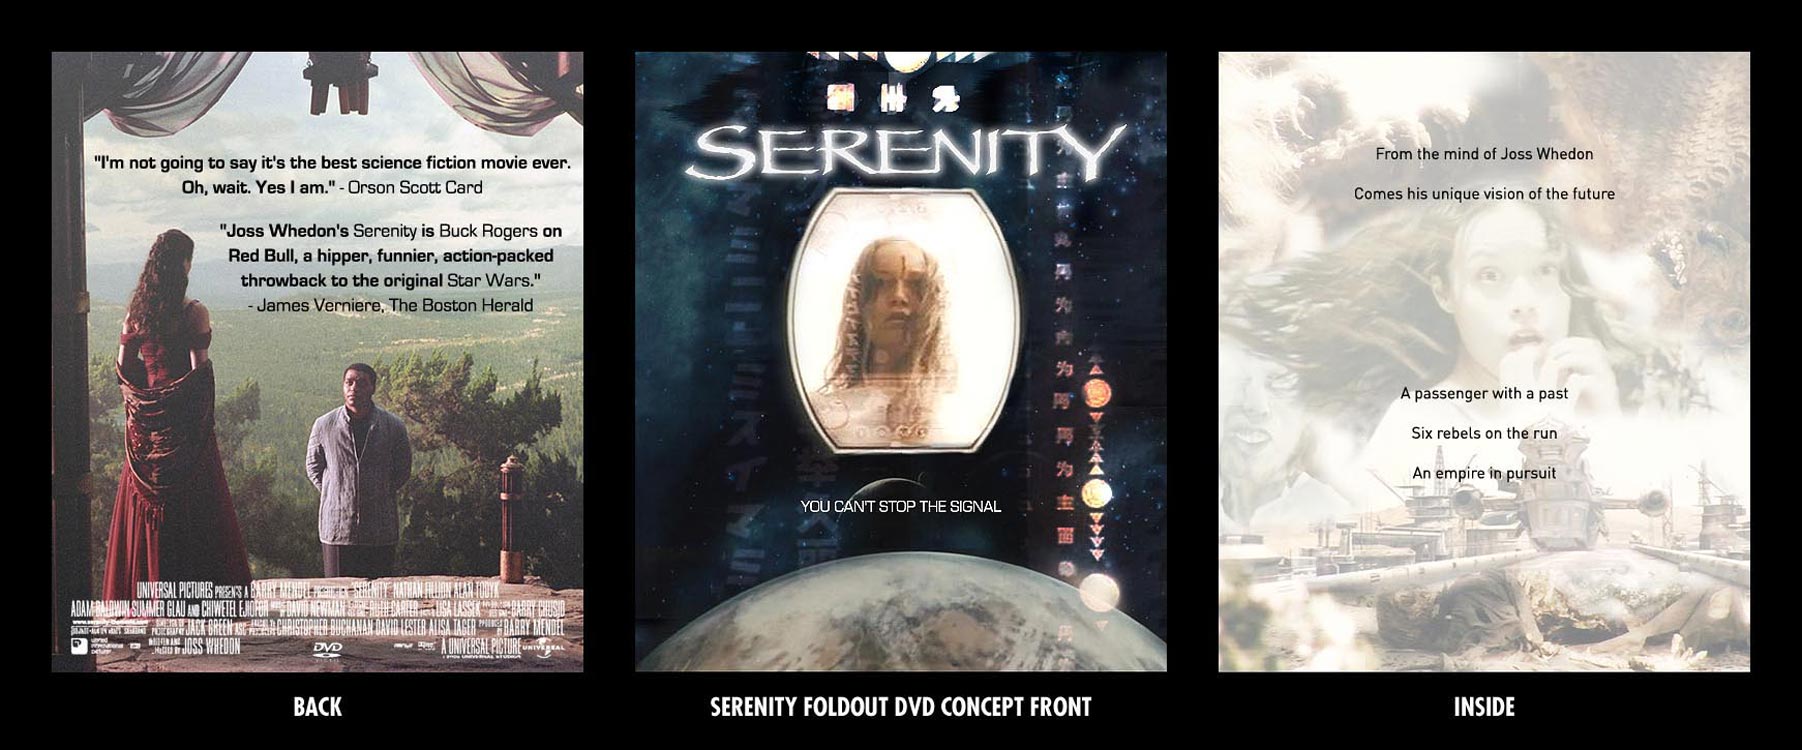 firefly-serenity-movie-dvd-covers-fan-arts-gq-13.jpg